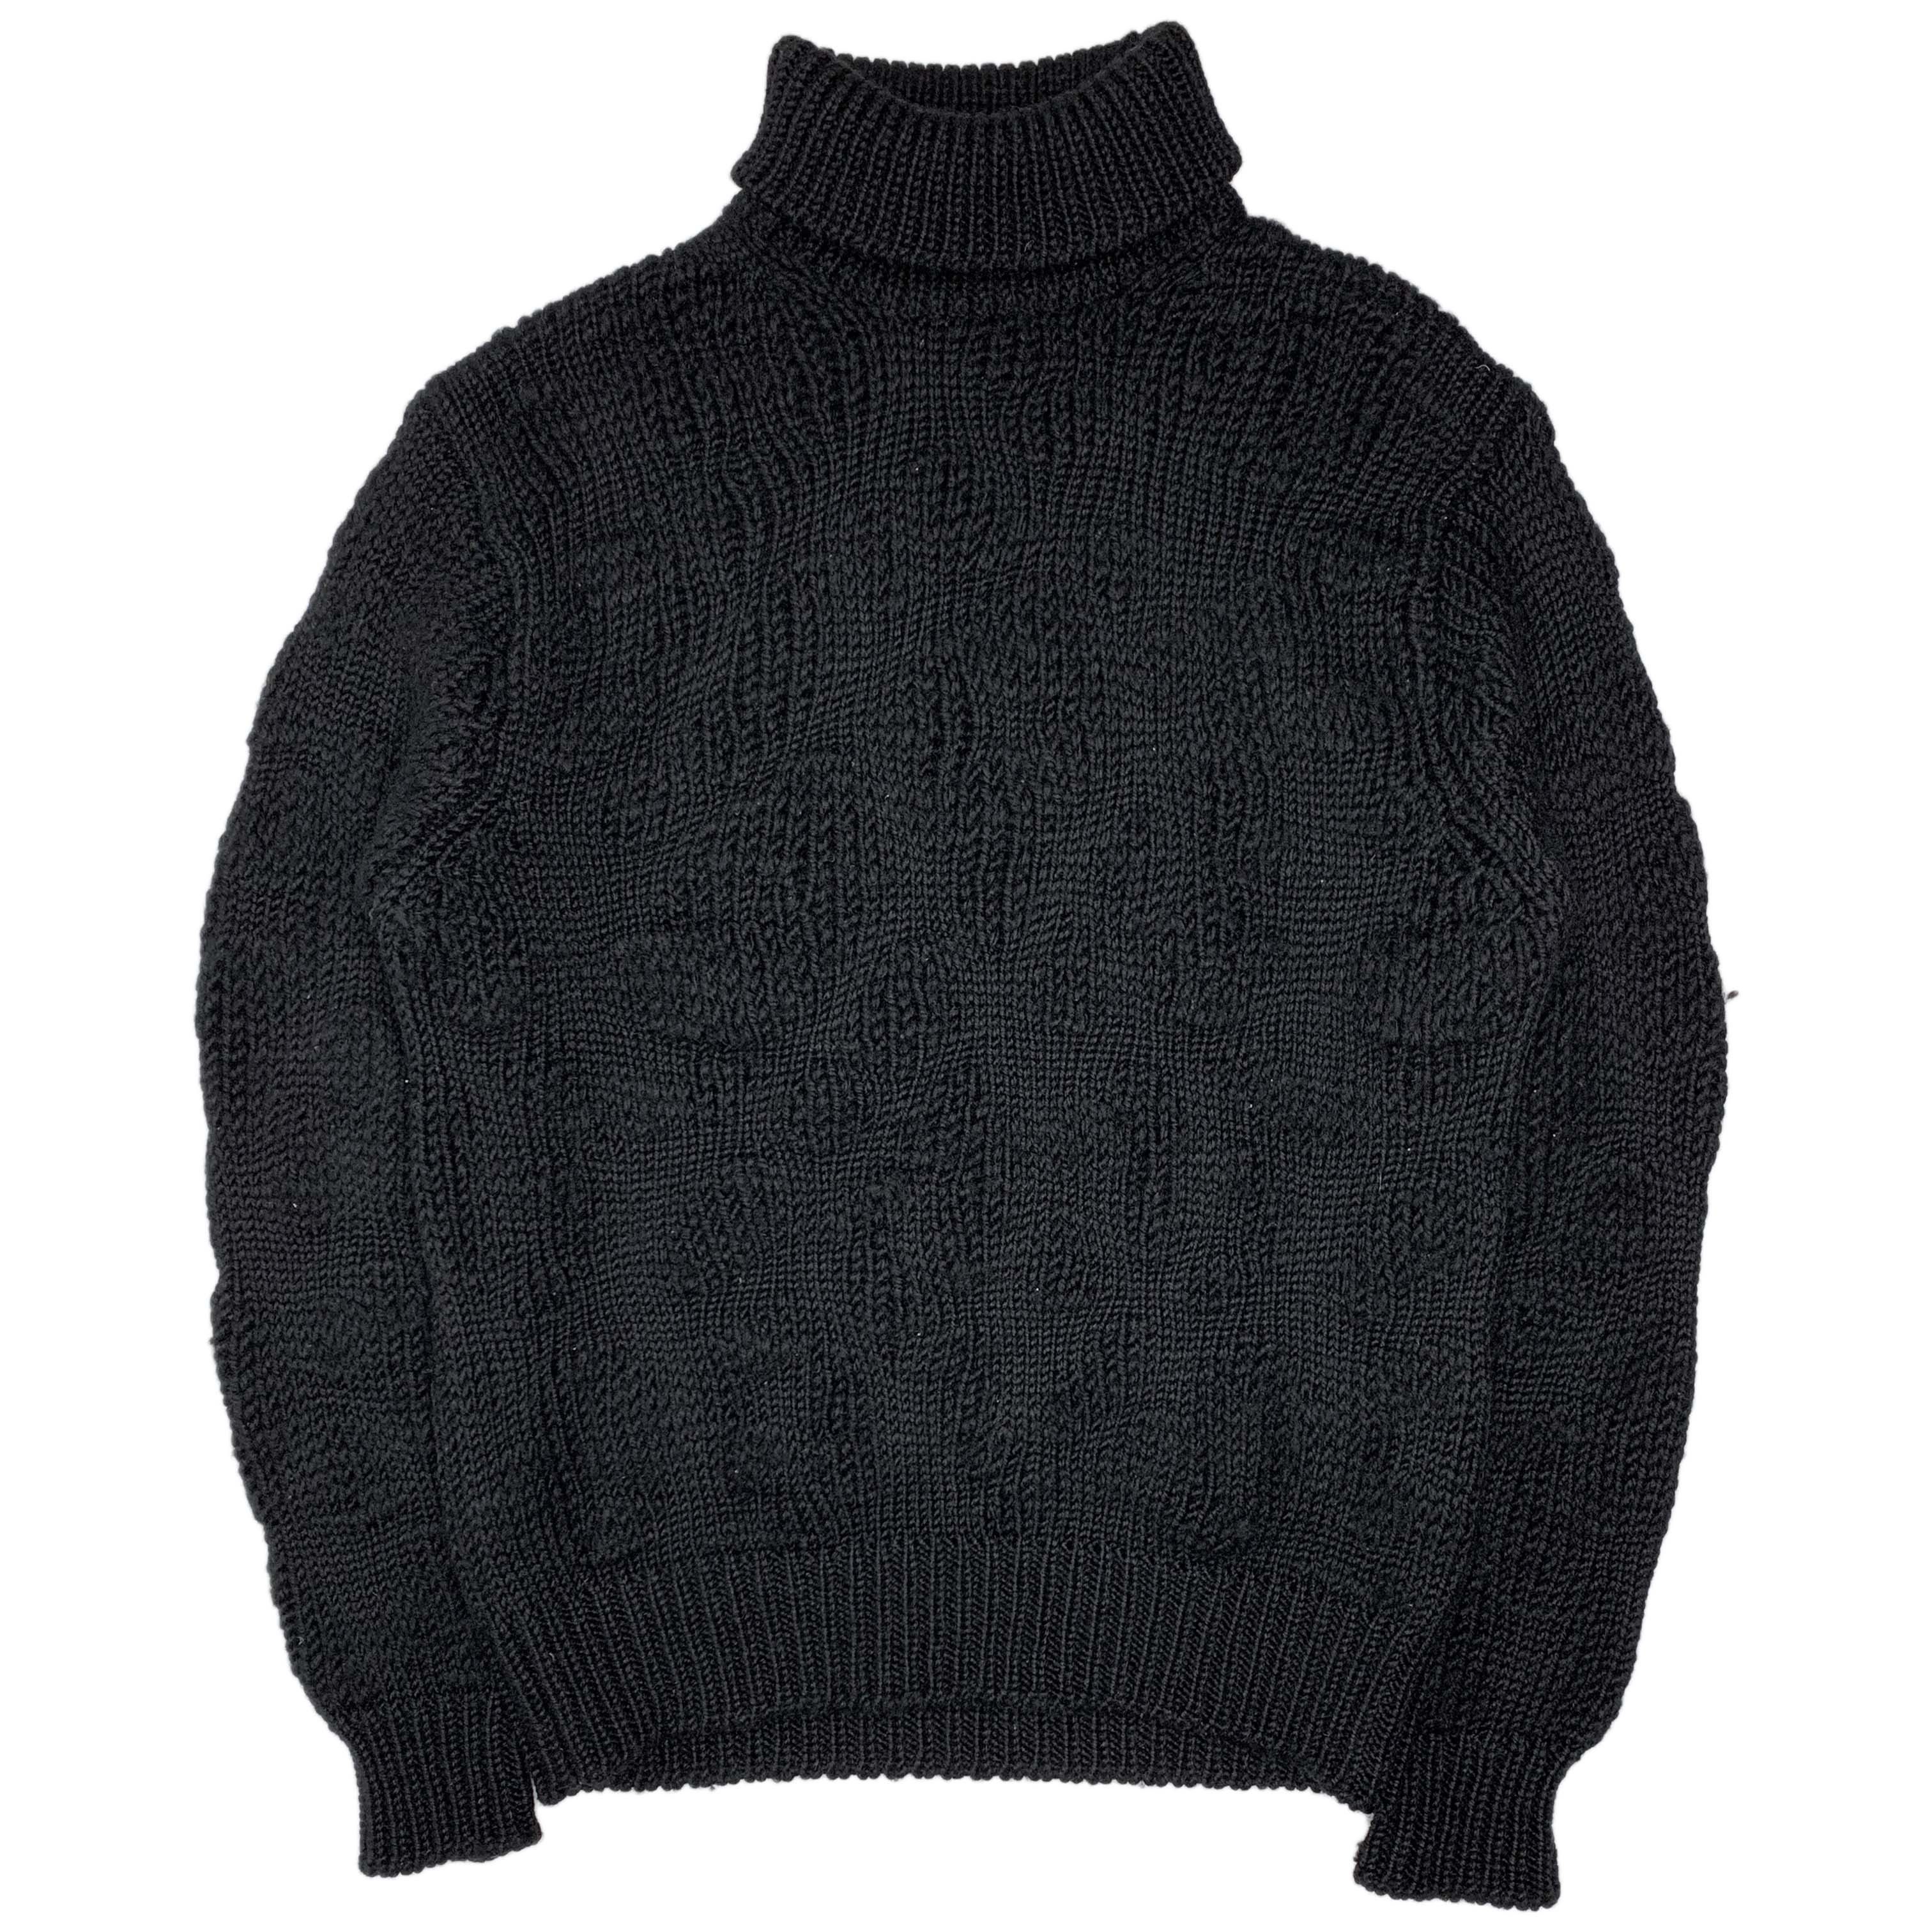 AW98 Distortion Knit Wool Turtleneck Sweater - 1